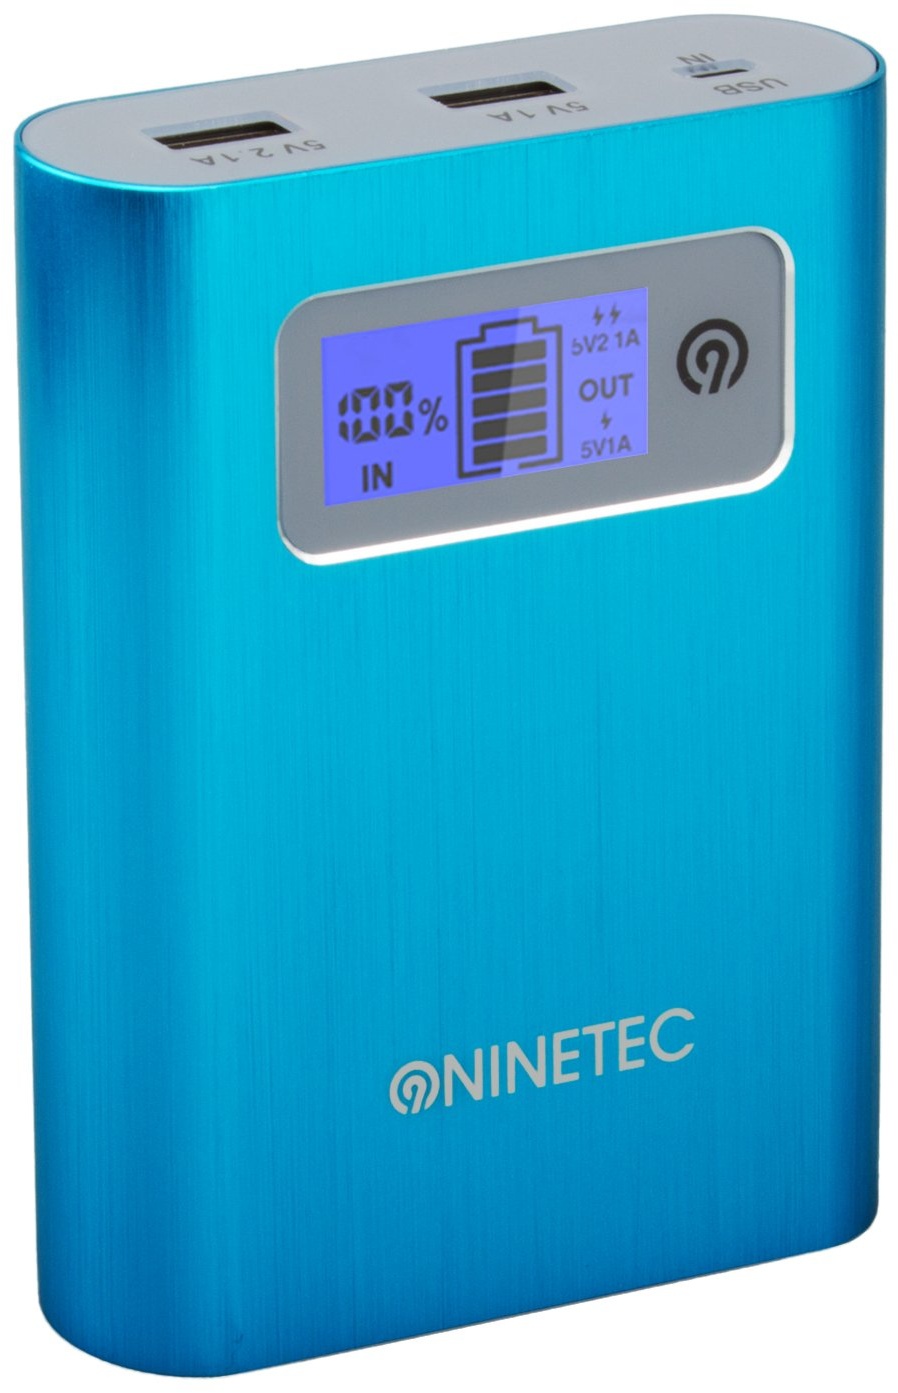 NINETEC PowerDrive 2in1 64GB USB Flash Speicher + 13.400mAh Power Bank Akku Ladegerät in Blau